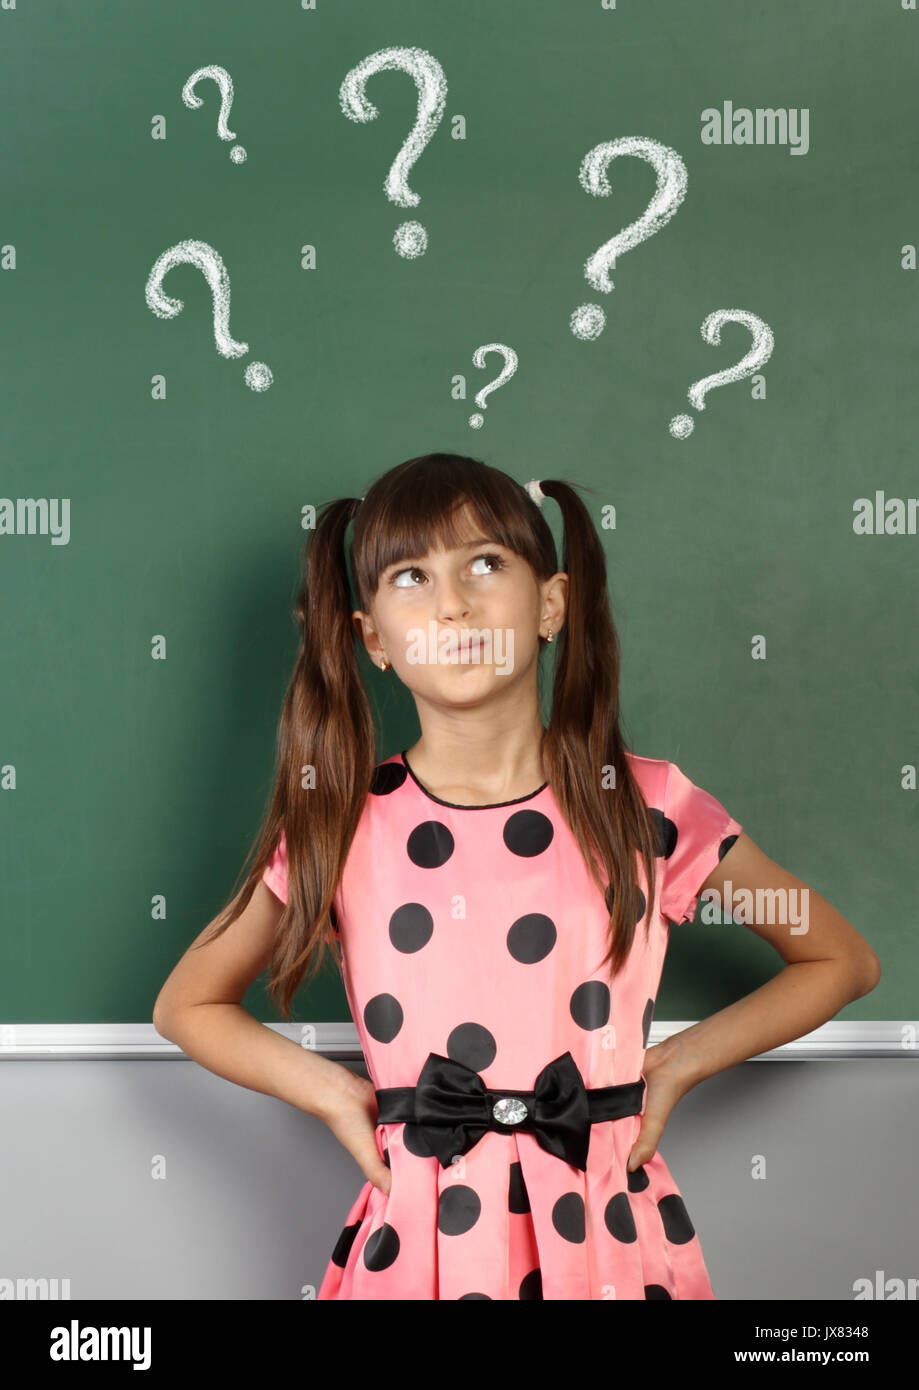 Child with question mark on school blackboard Stock Photo